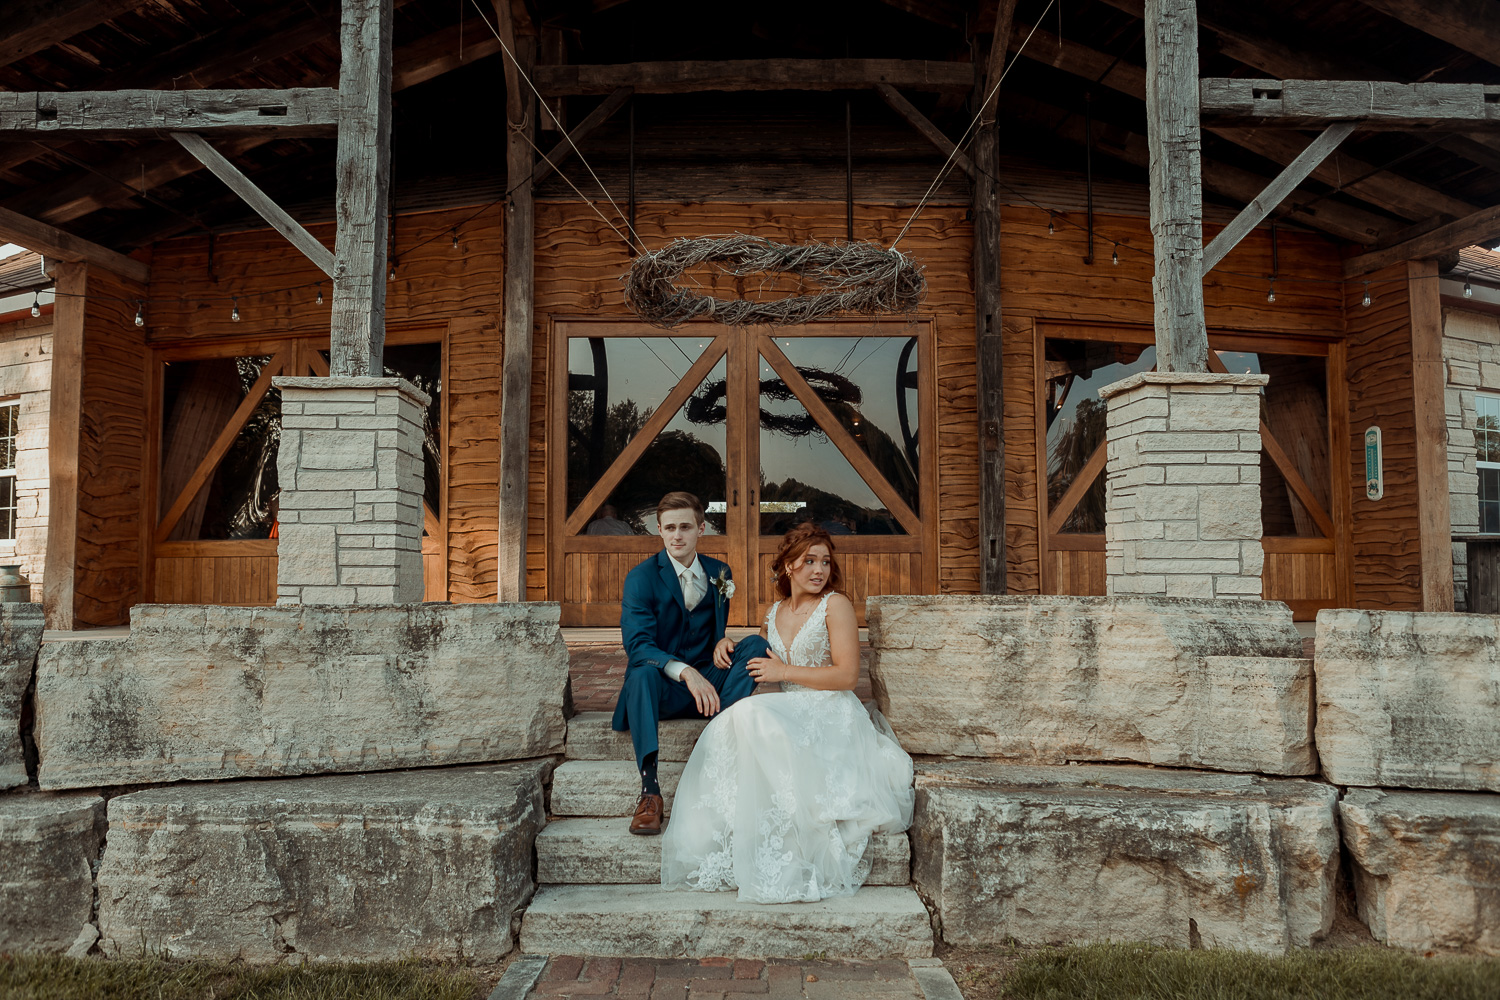 Celebration Barn Wedding Pictures, Solon, Iowa